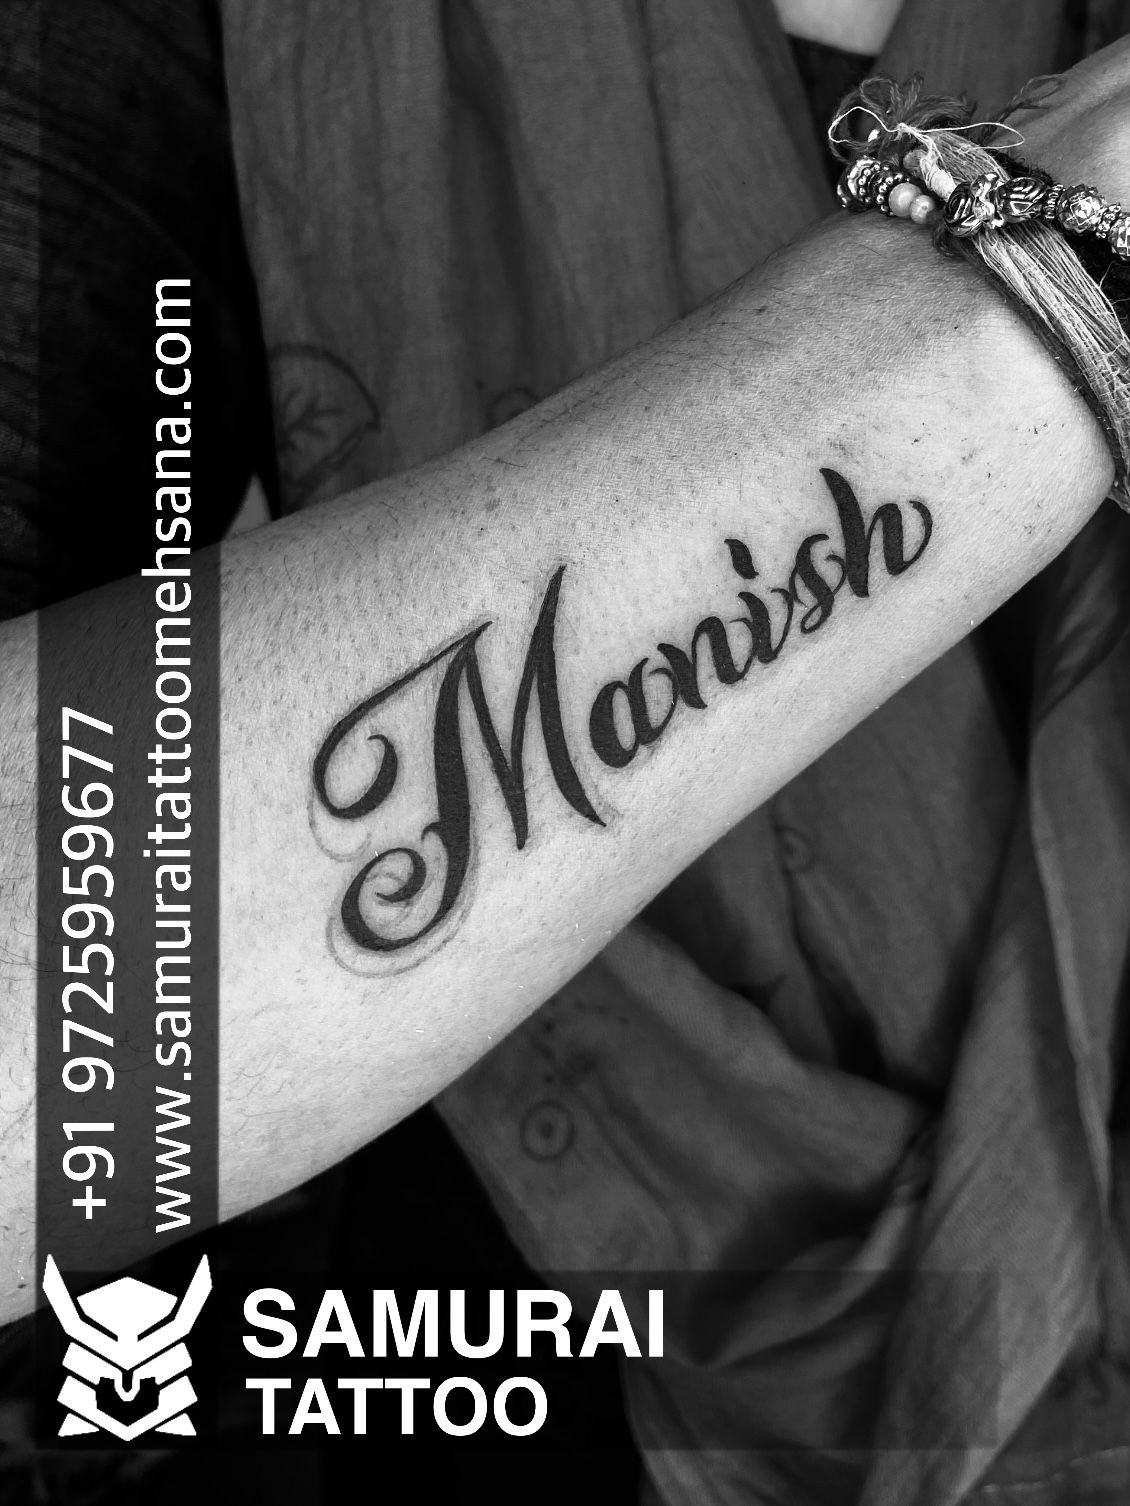 Manish  tattoo words download free scetch